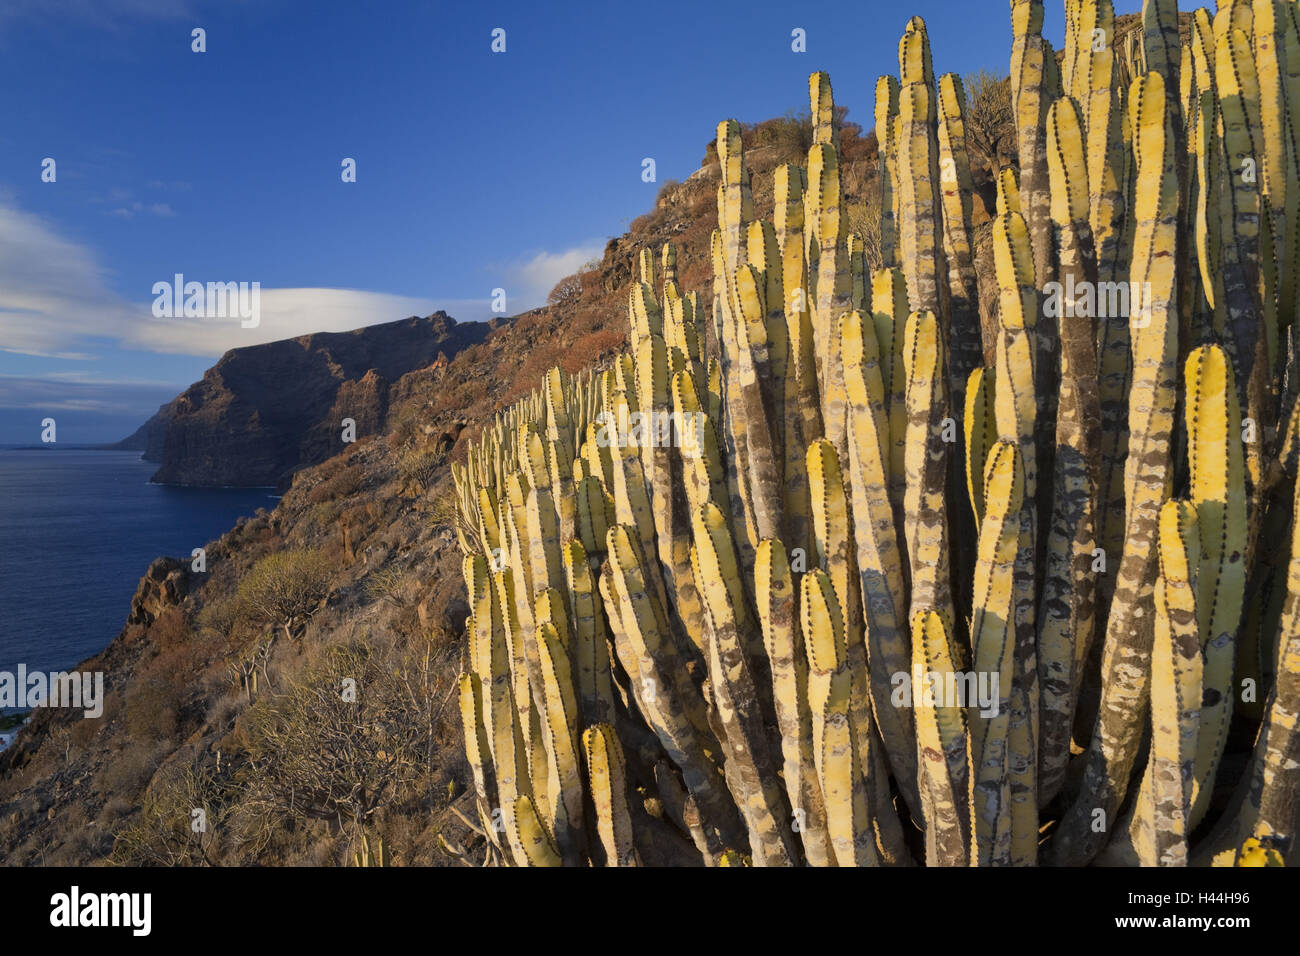 Spagna Isole Canarie, Tenerife, Acantilado de off Gigantes, bile costa, cactus, Foto Stock